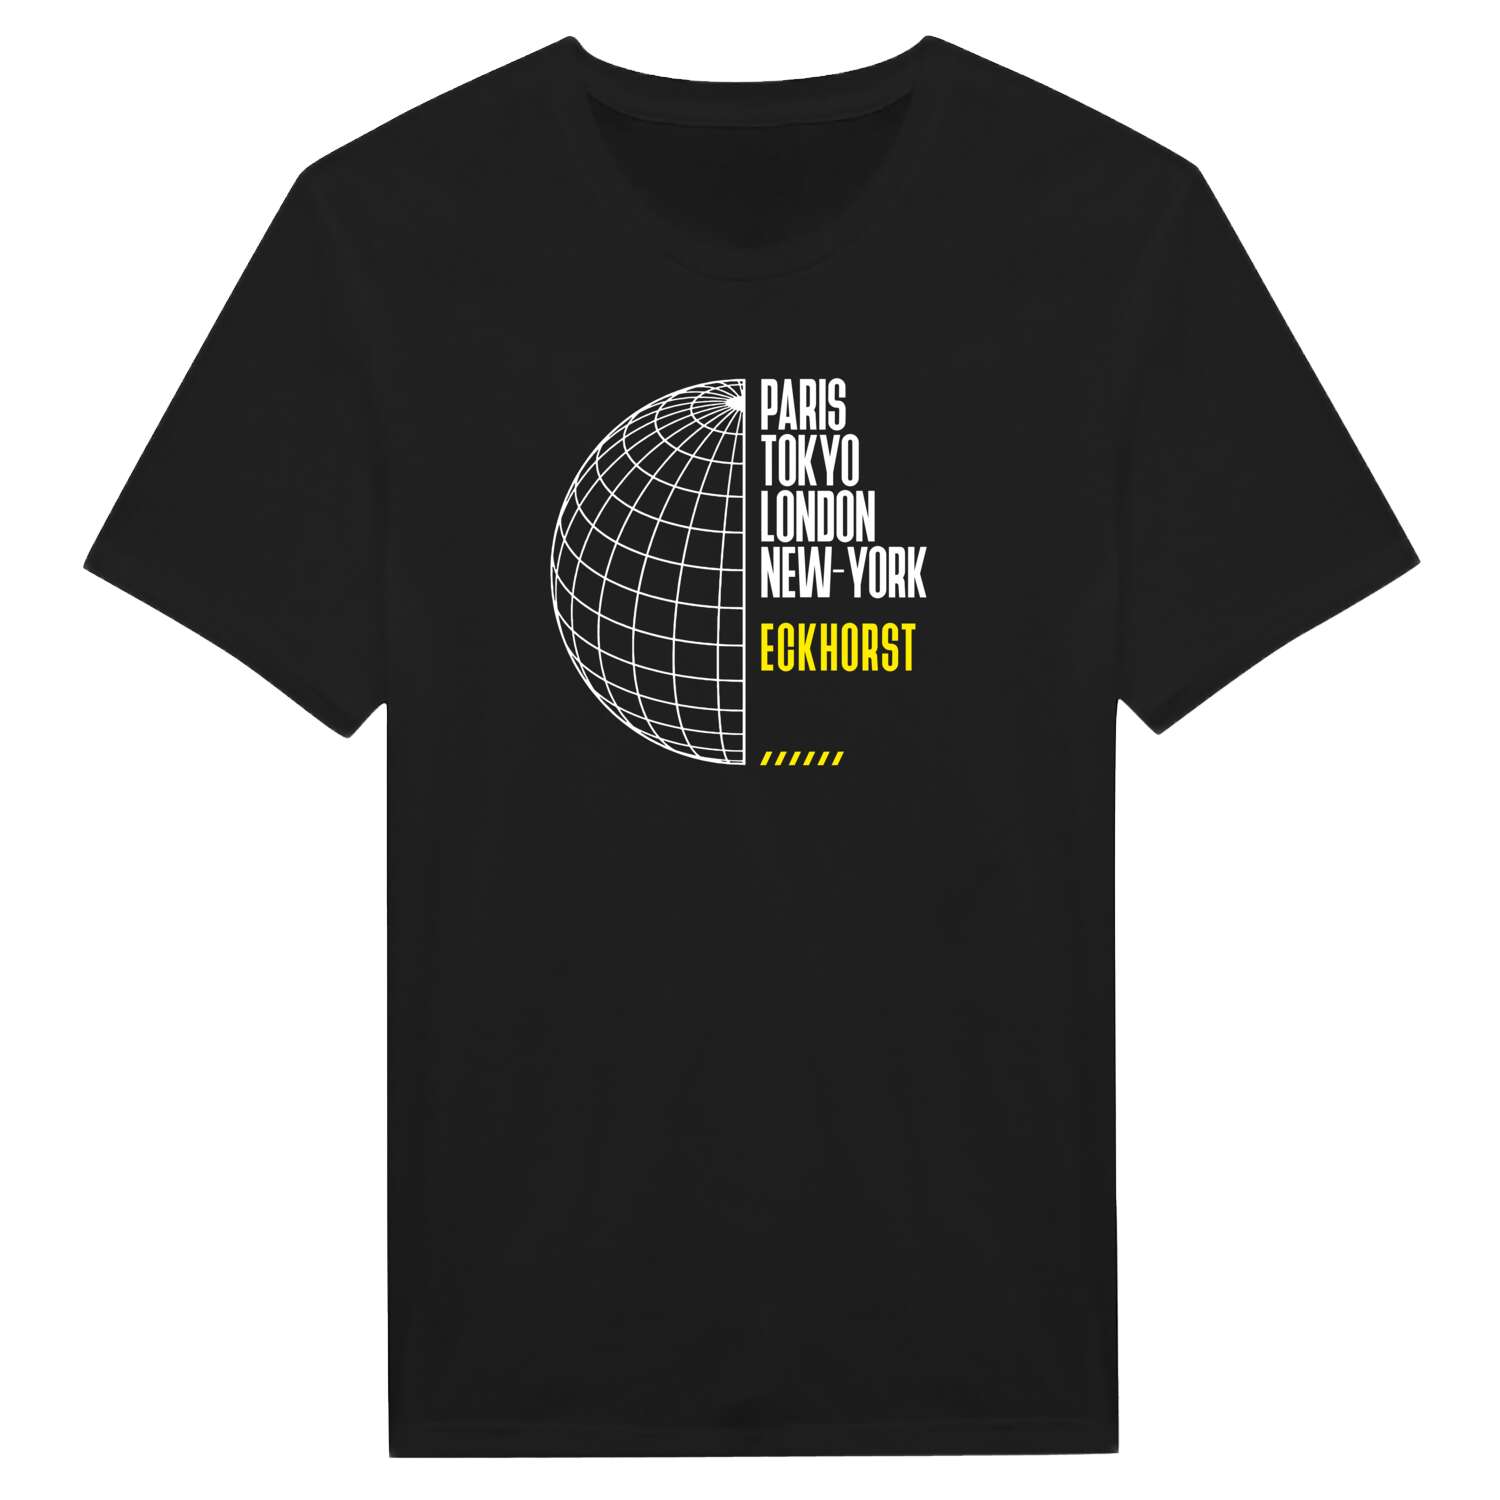 Eckhorst T-Shirt »Paris Tokyo London«